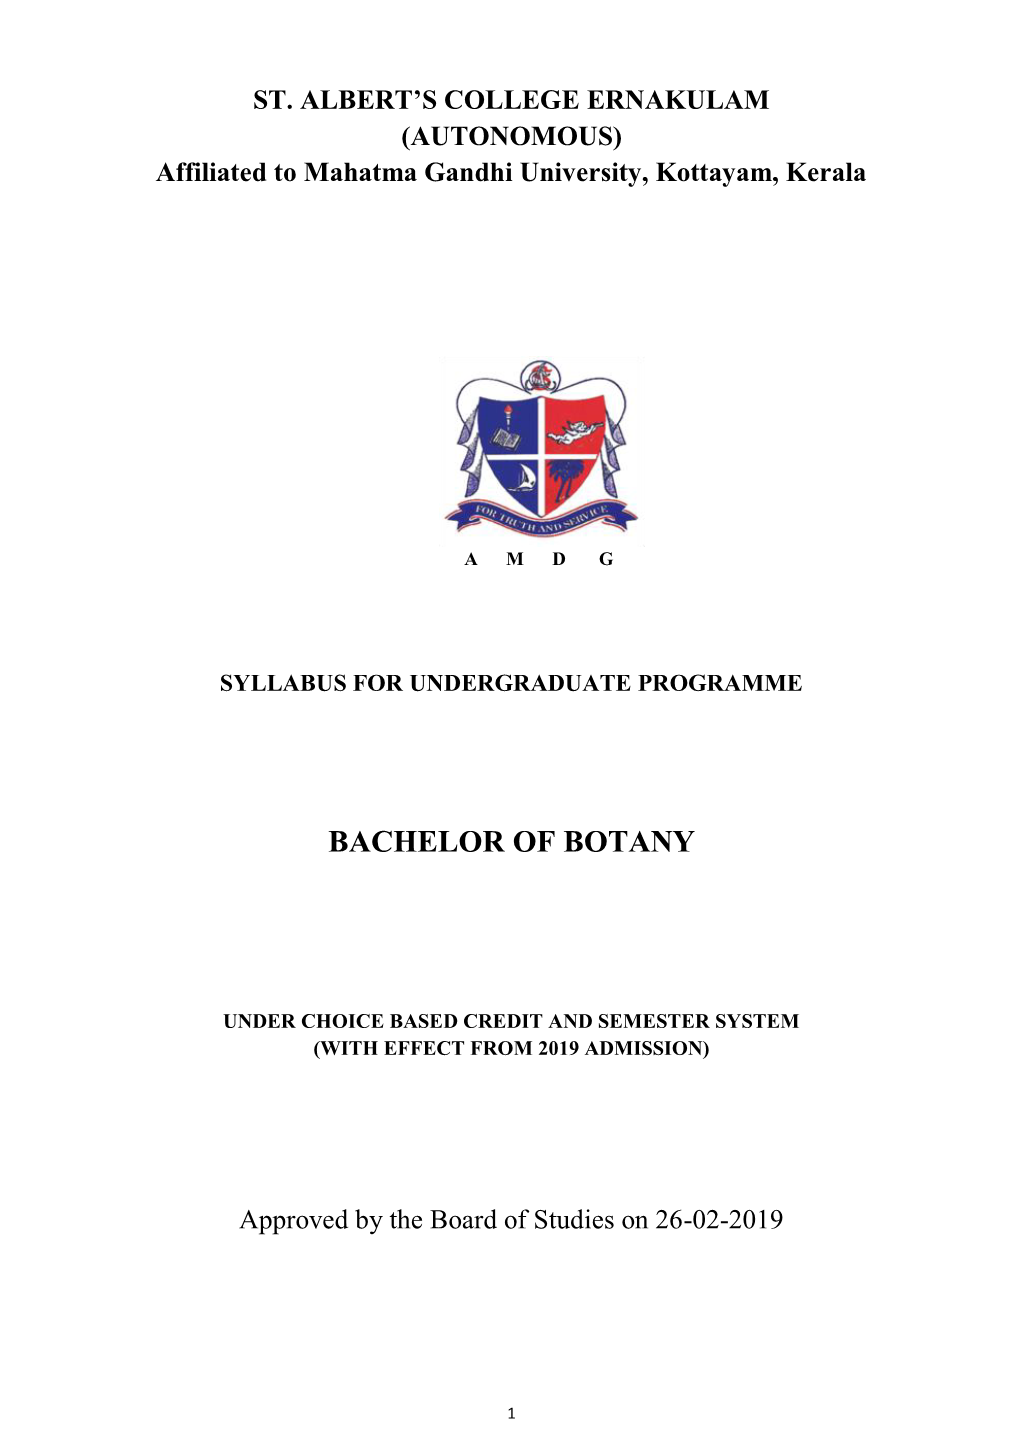 Bachelor of Botany